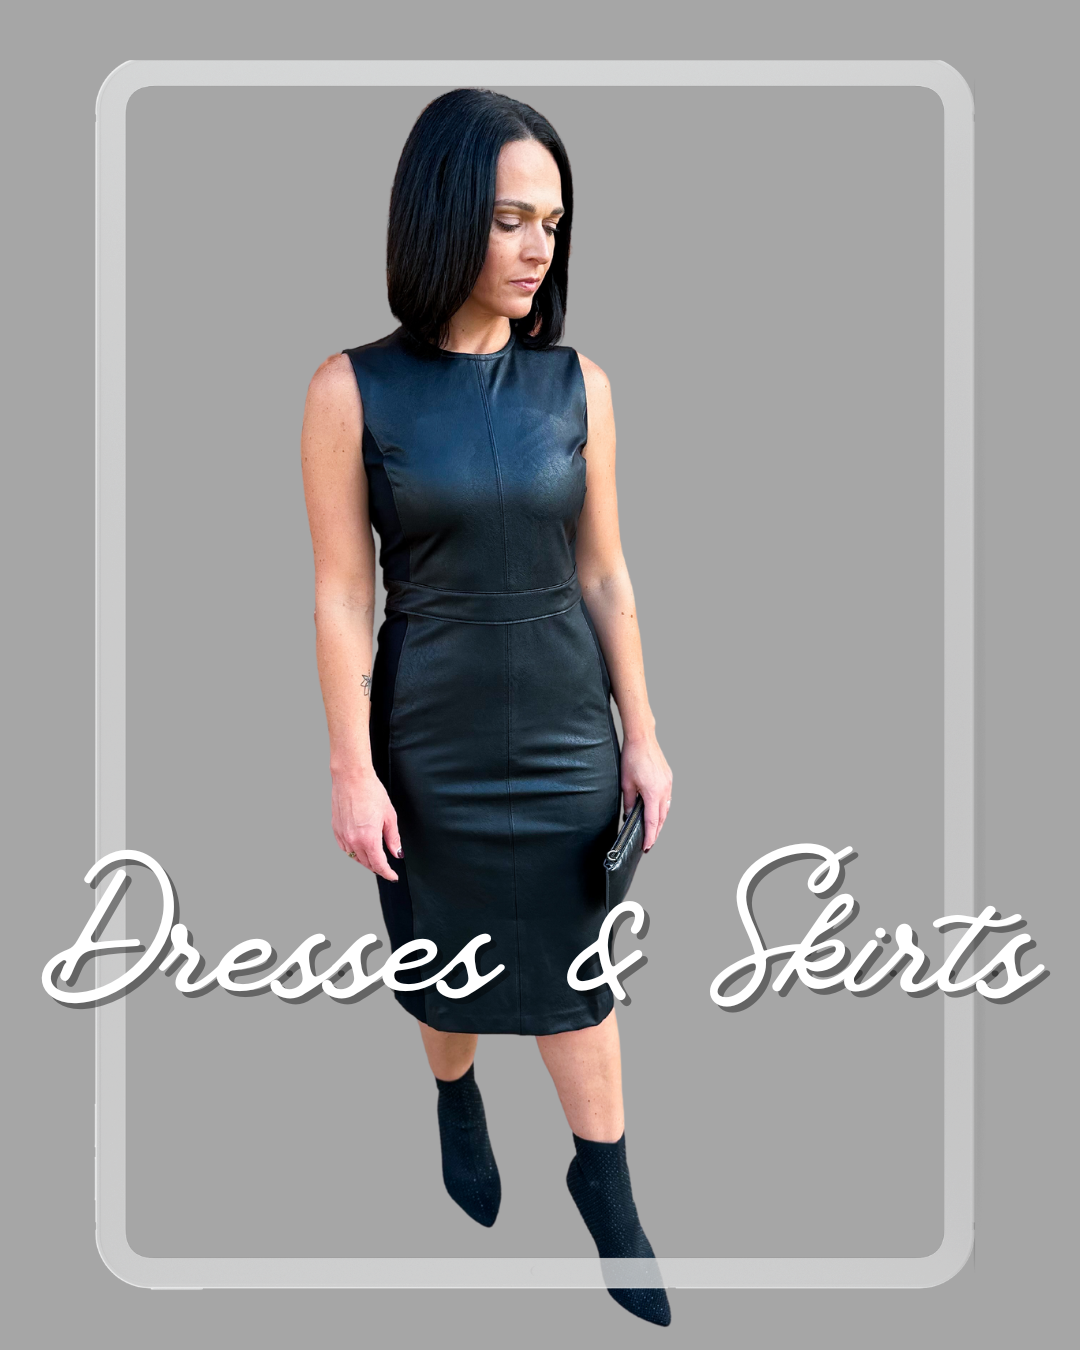 Dresses & Skirts